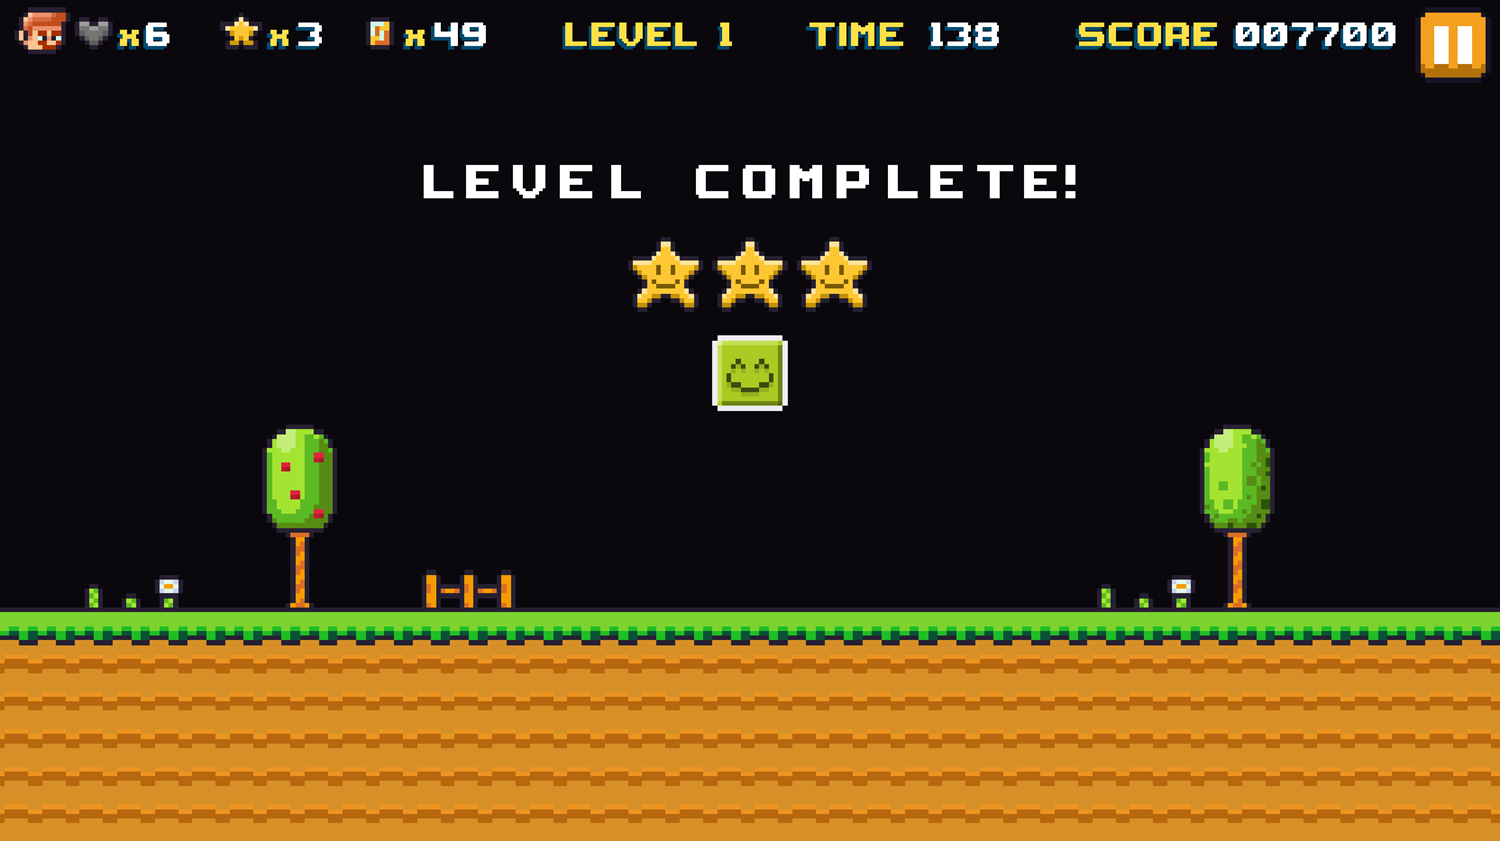 Ninja Plumber Game Level Complete Screenshot.